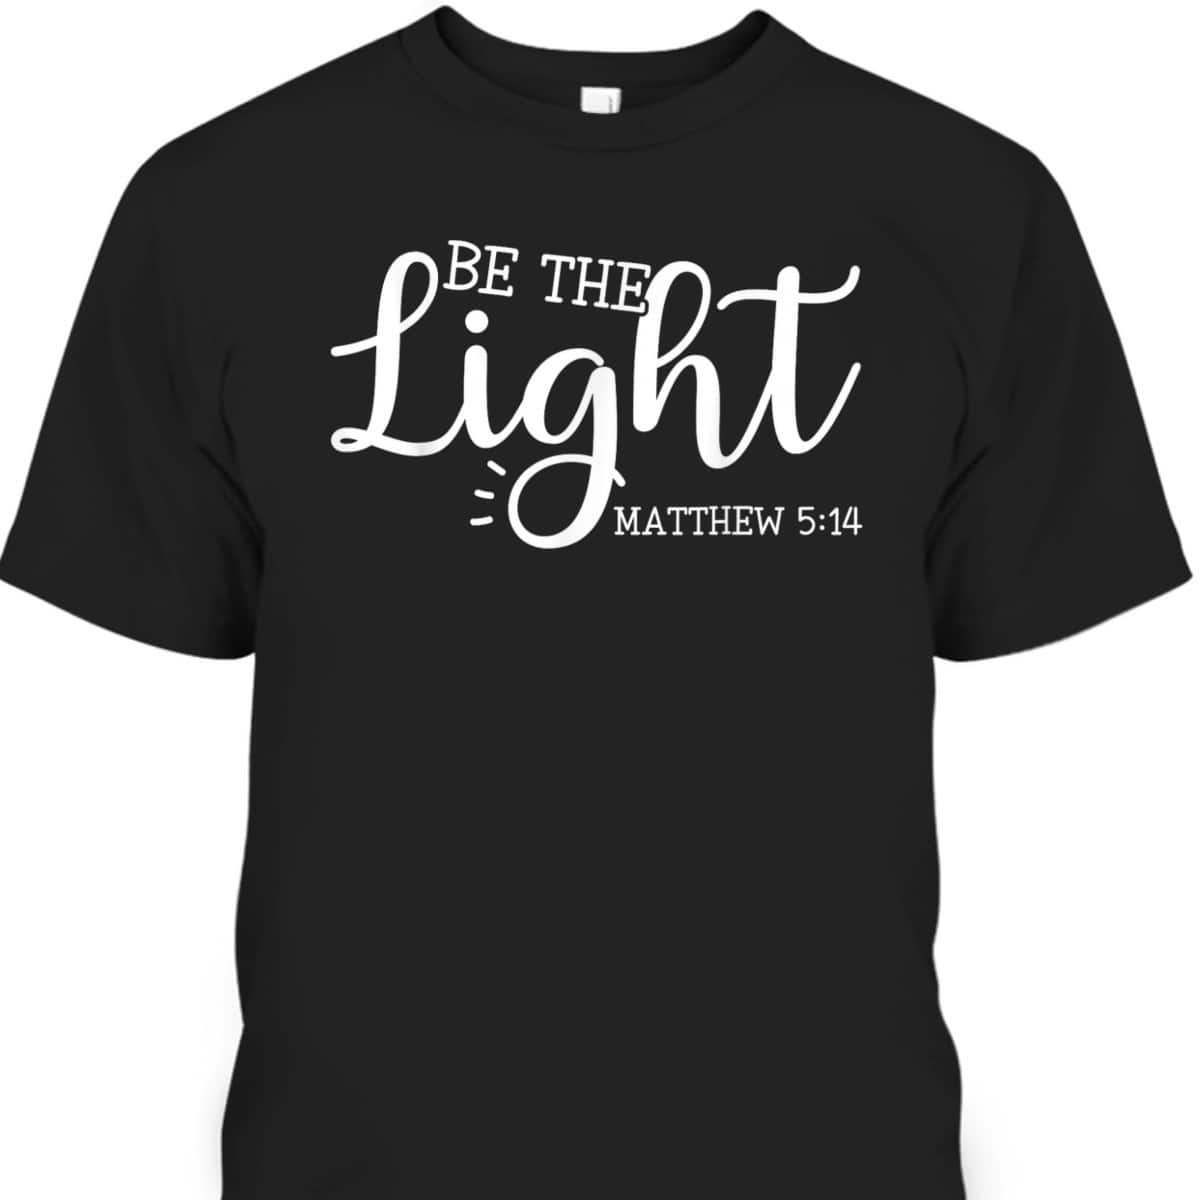 Be The Light T-Shirt Matthew 5:14 Christianity Inspirational Gift